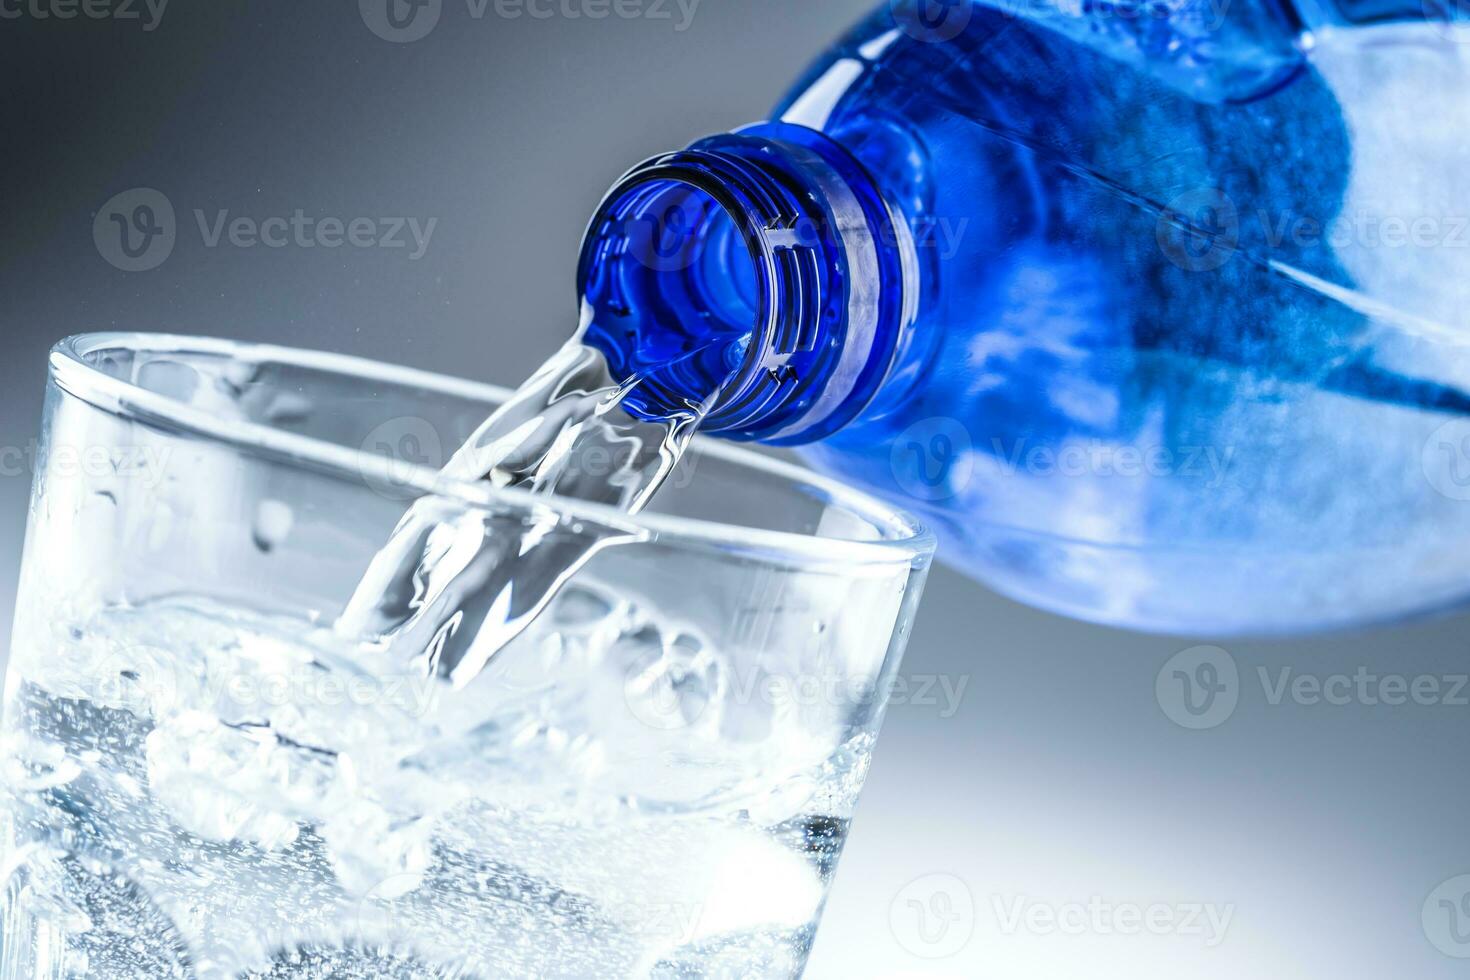 torrencial mineral agua desde azul botella dentro claro vaso en resumen gris antecedentes foto